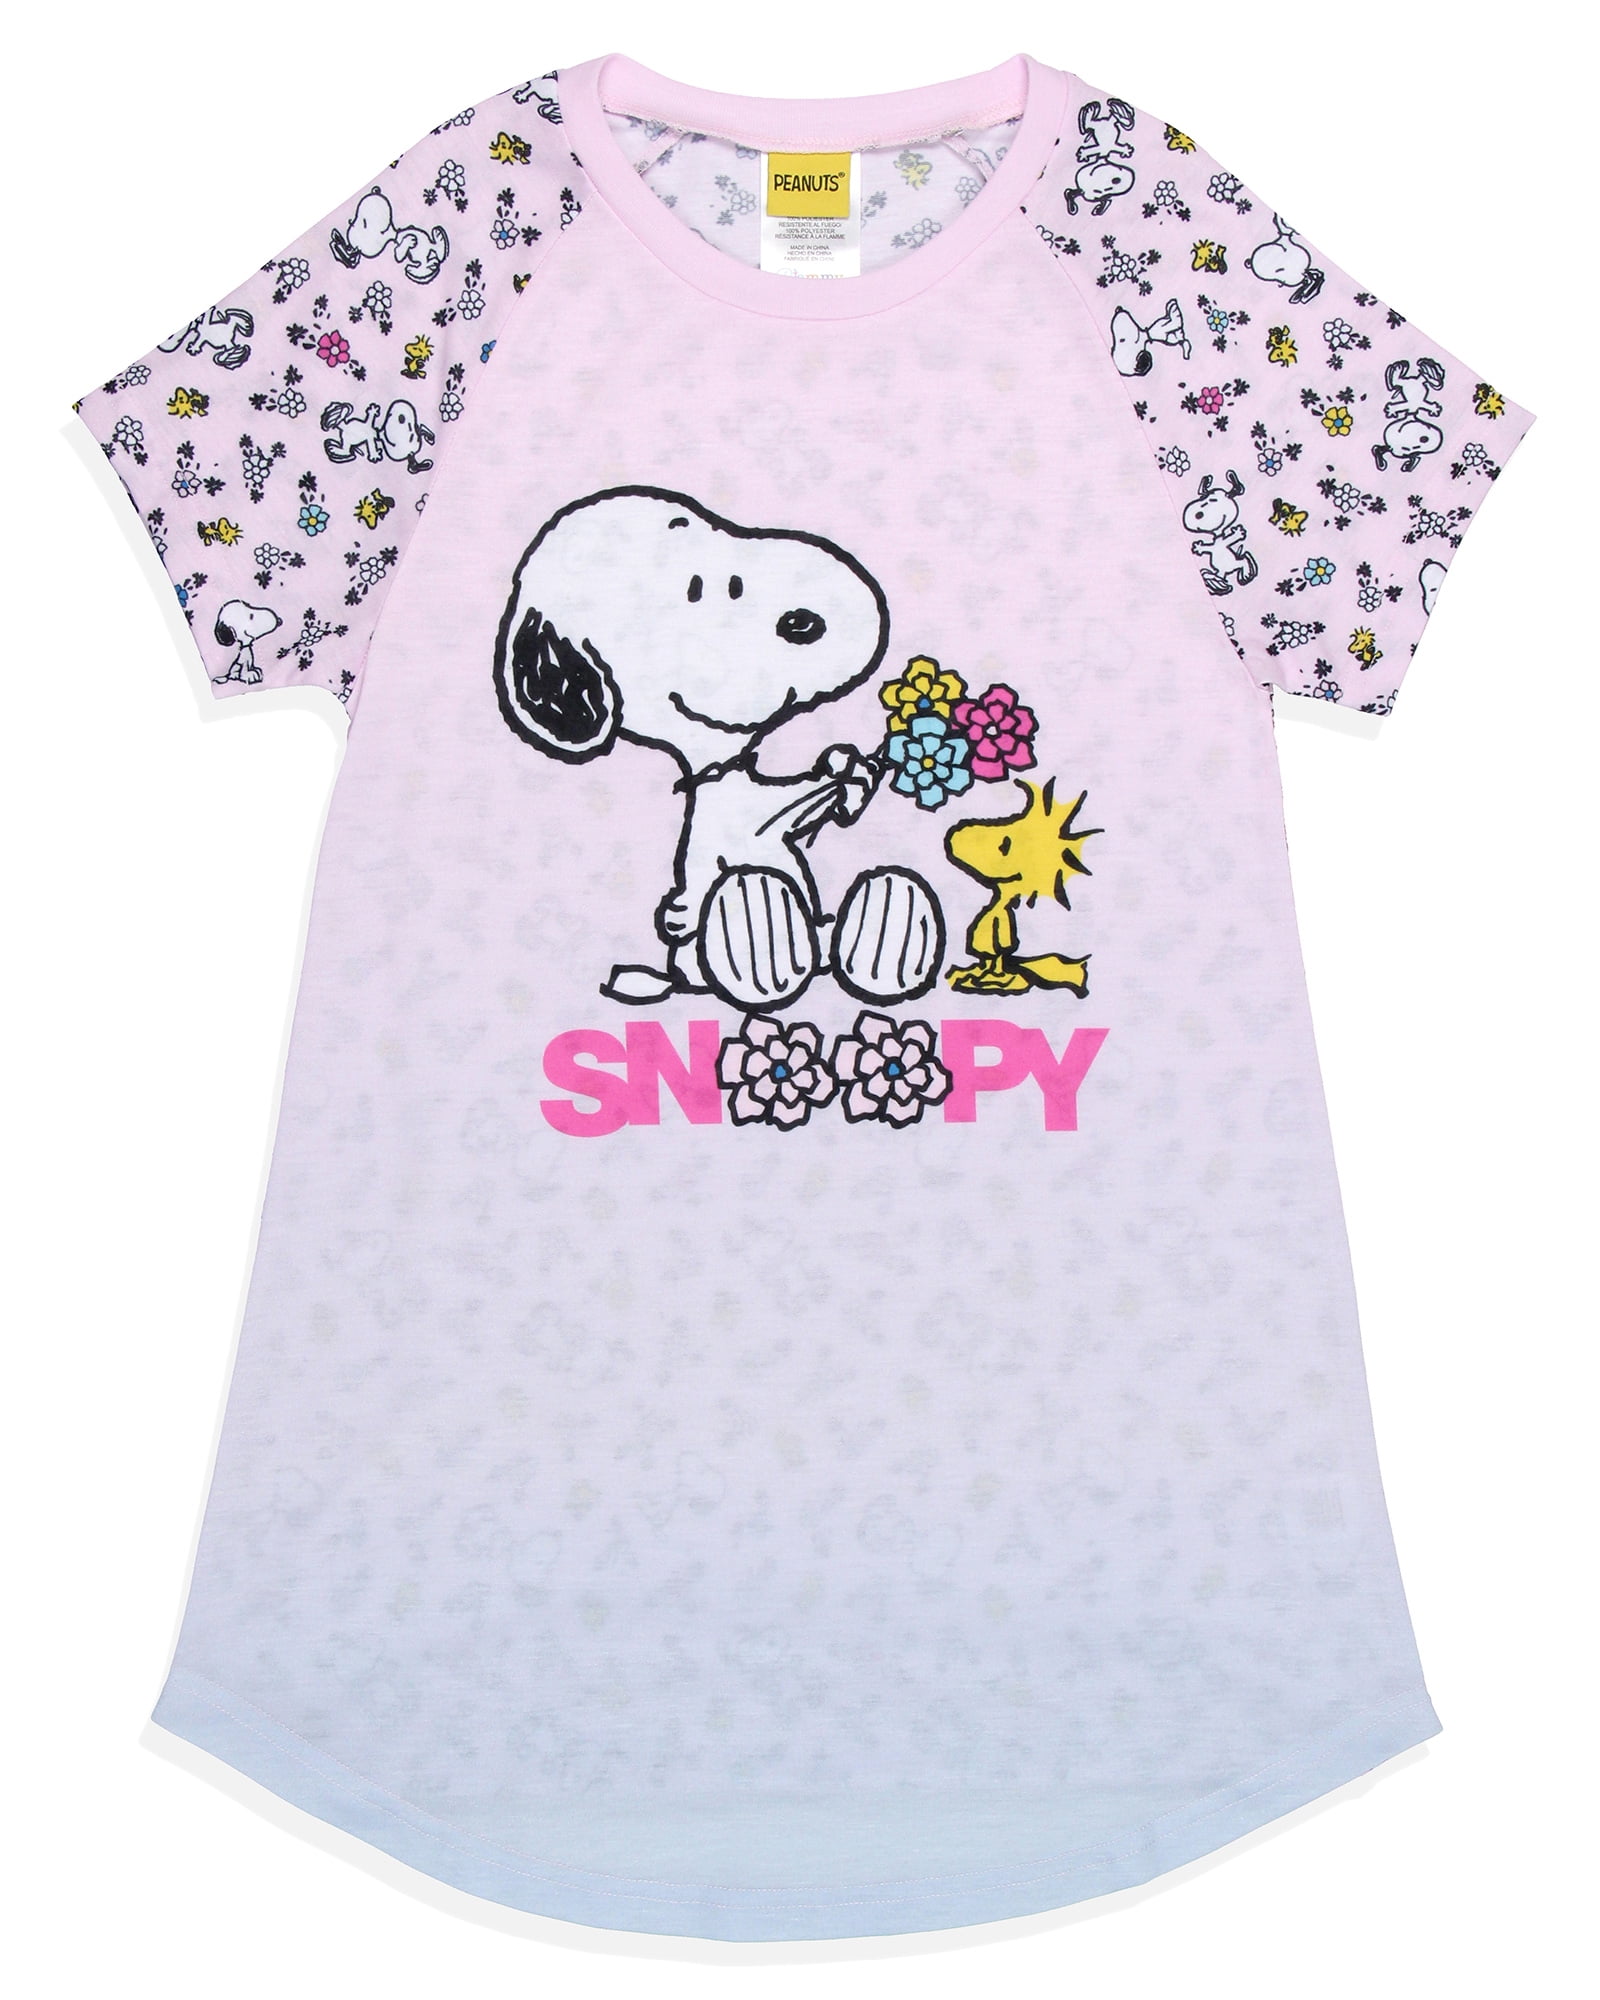 Woodstock Shirt Peanuts Snoopy (18/20) Nightgown Pajama Flowers Friends Girls\'